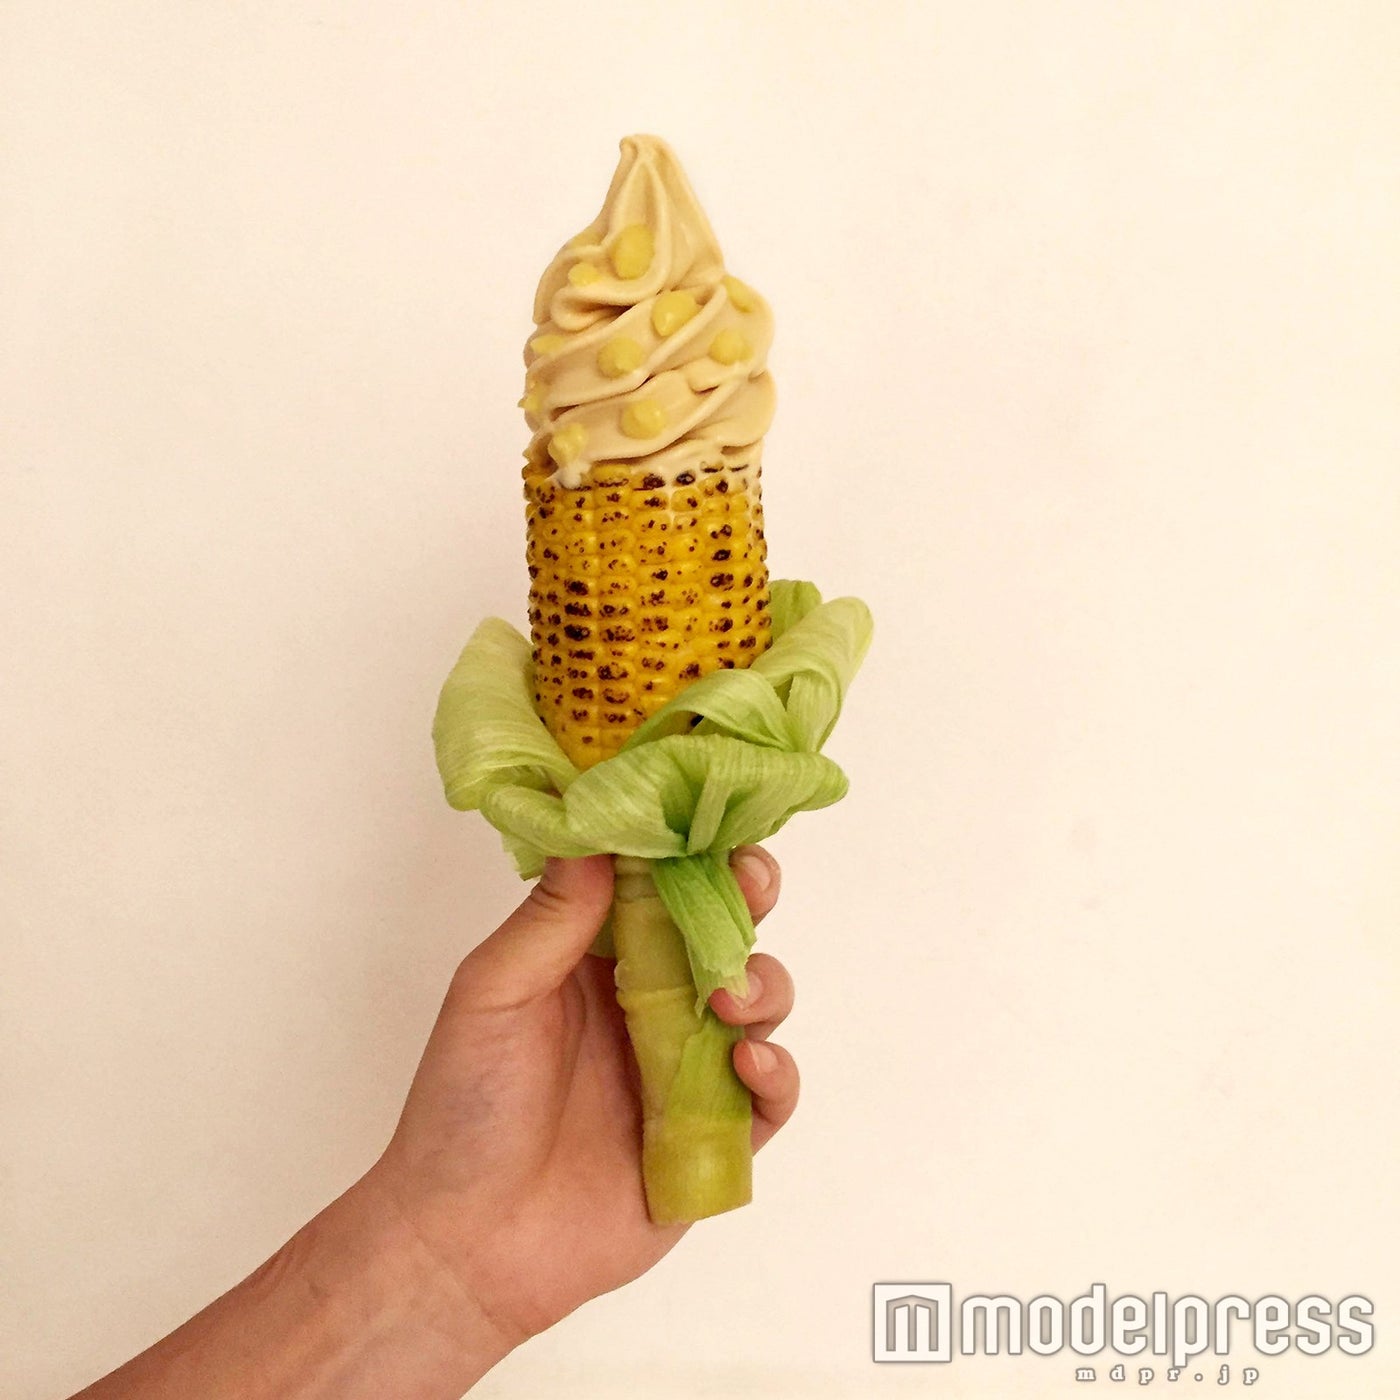 Creme de la corn 1,000円